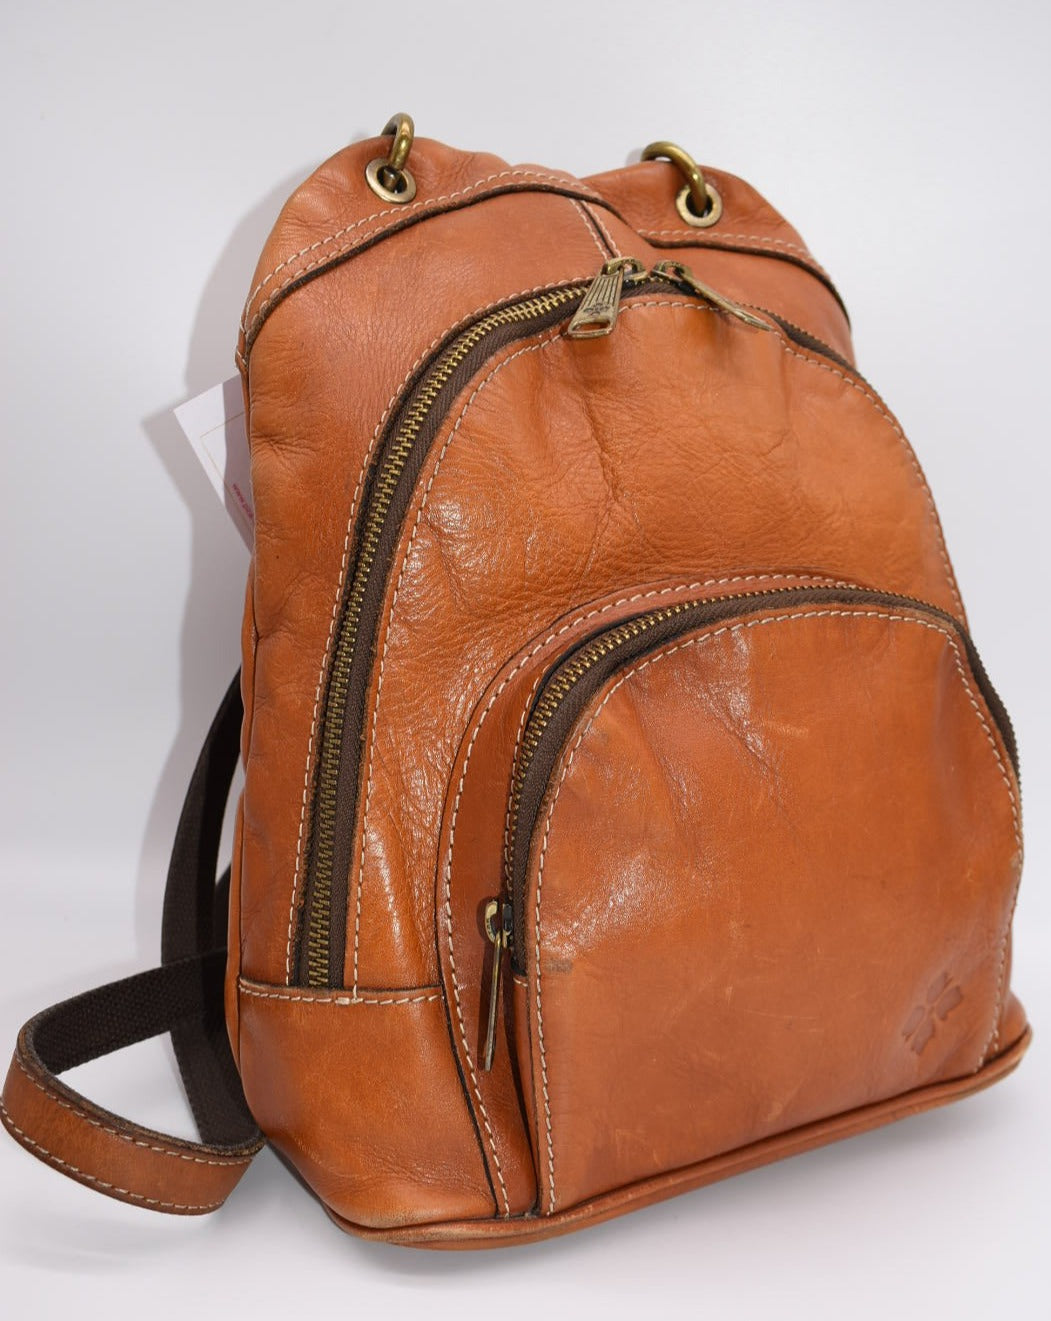 Patricia Nash Alencon Small Backpack in Heritage Tan